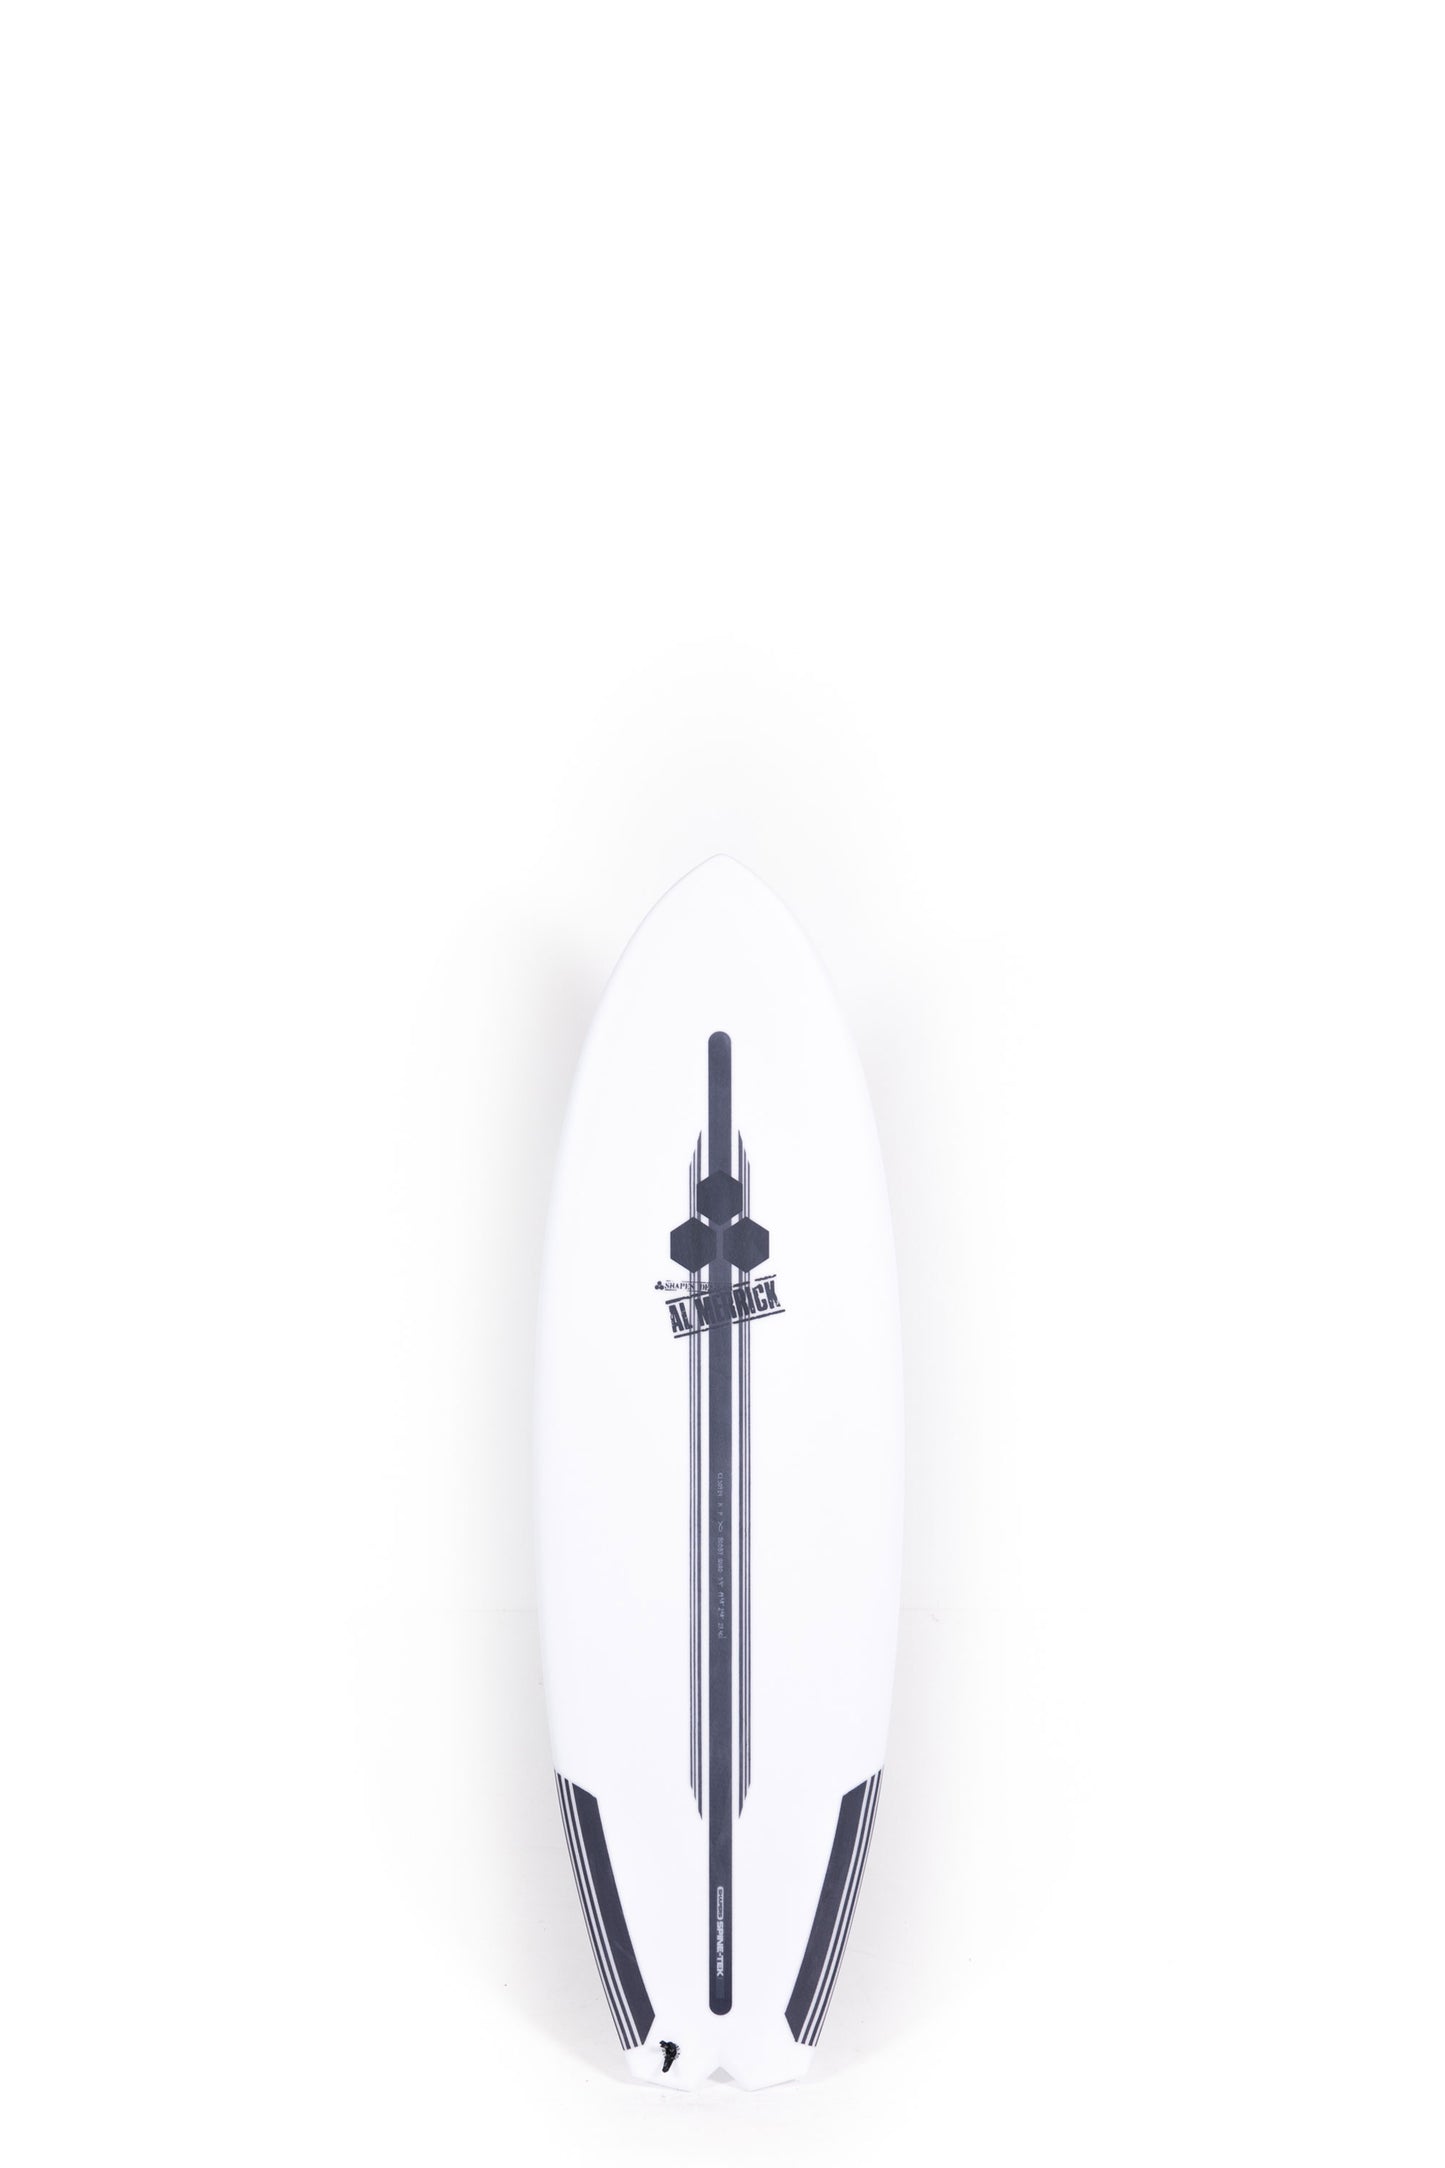 Pukas Surf Shop Channel Islands Surfboards Bobby Quad 5'4"